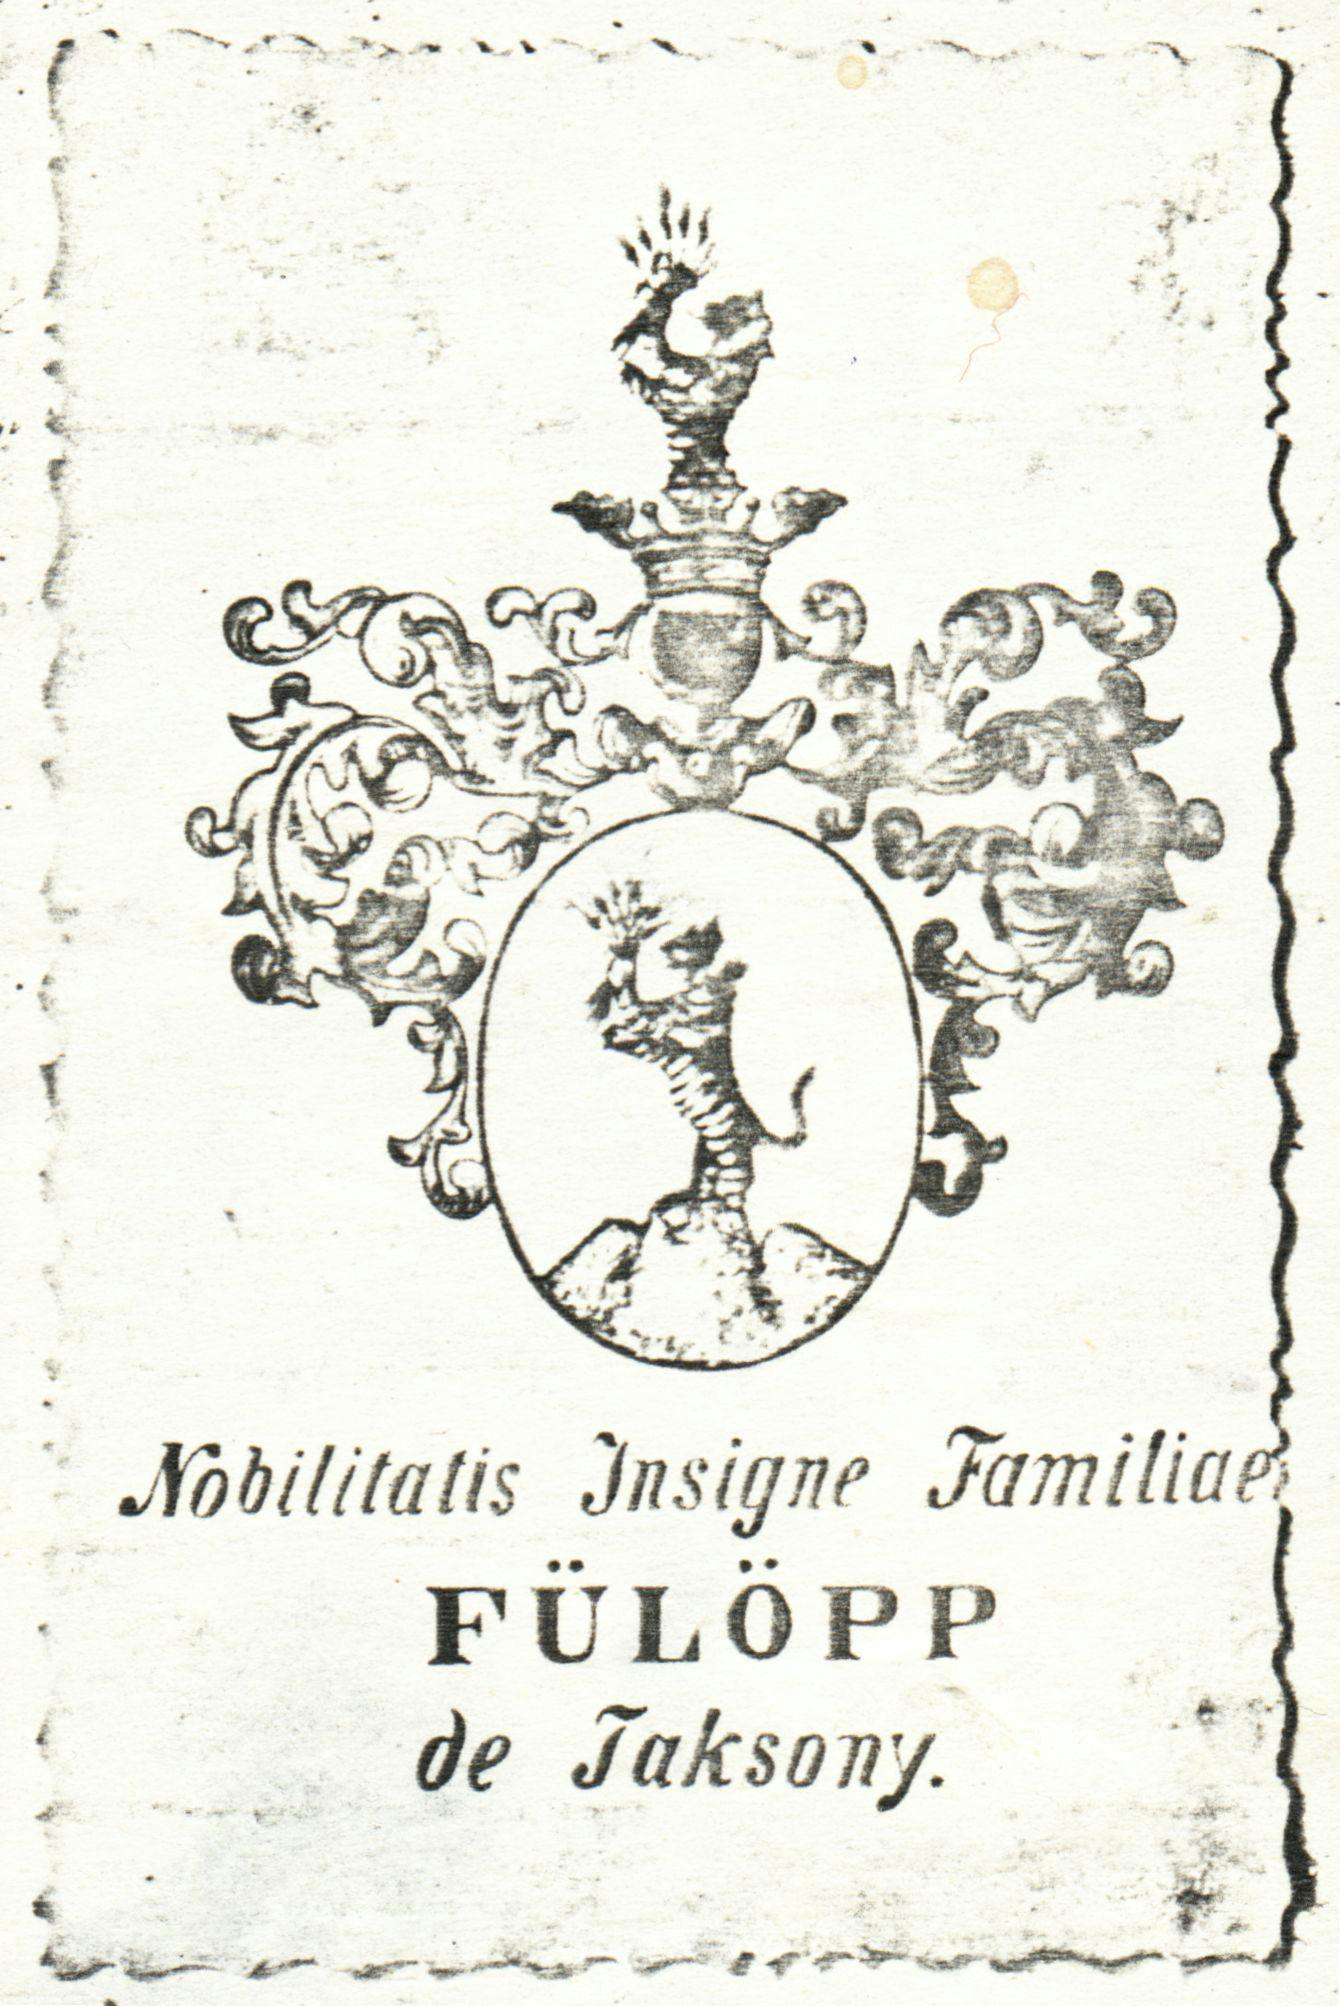 Coat of arms: Nobilitatis Insigne Familiae Fülöpp de Taksony